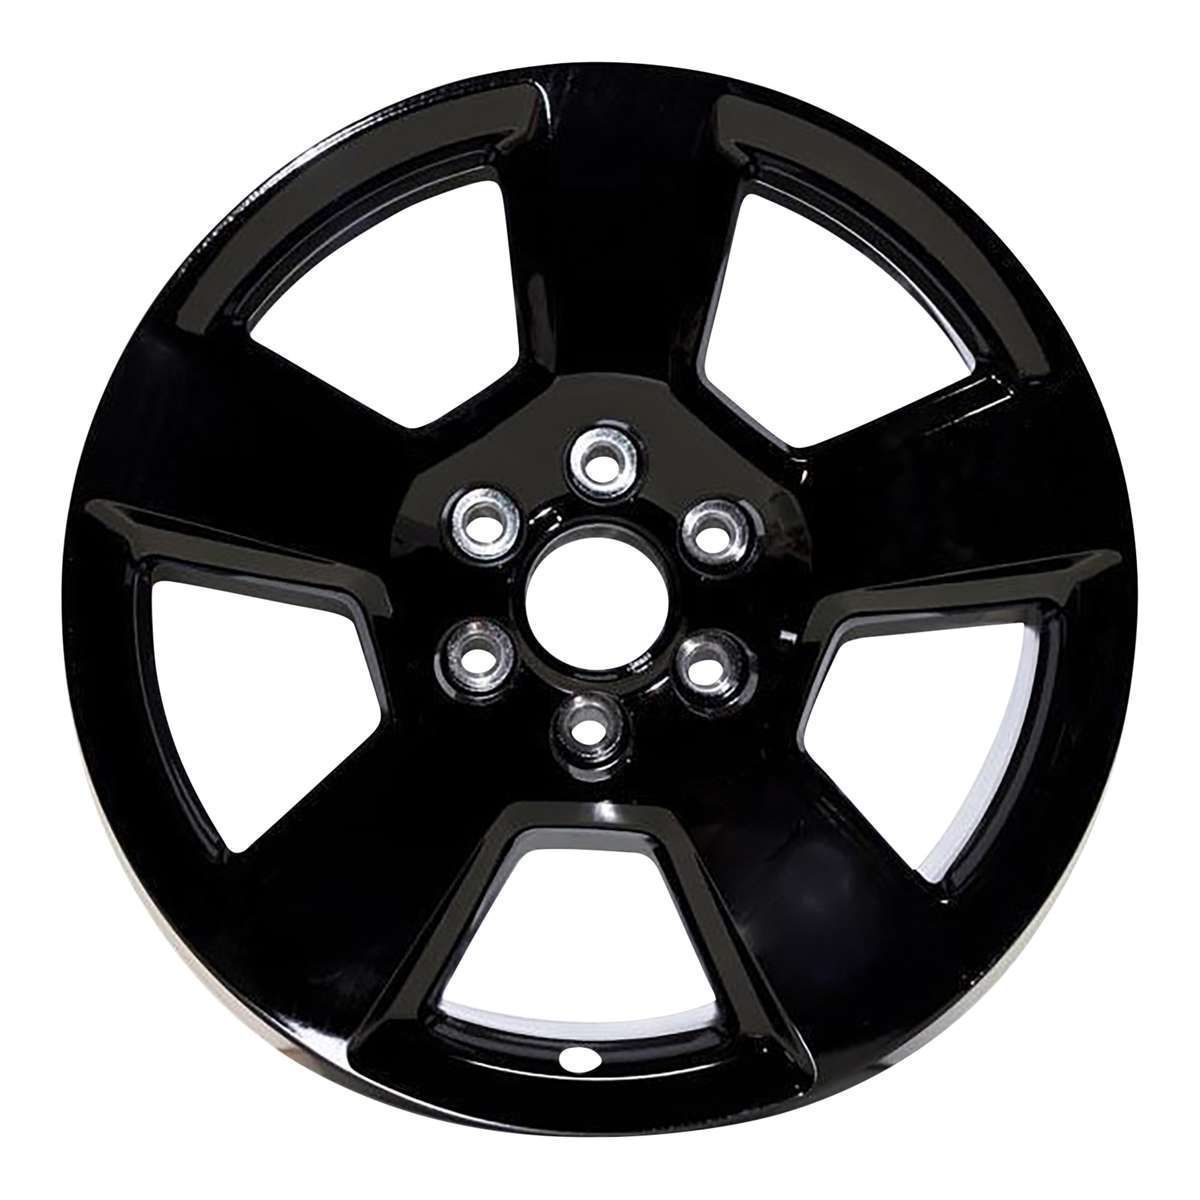 2021 GMC Yukon XL 20" OEM Wheel Rim W5652B